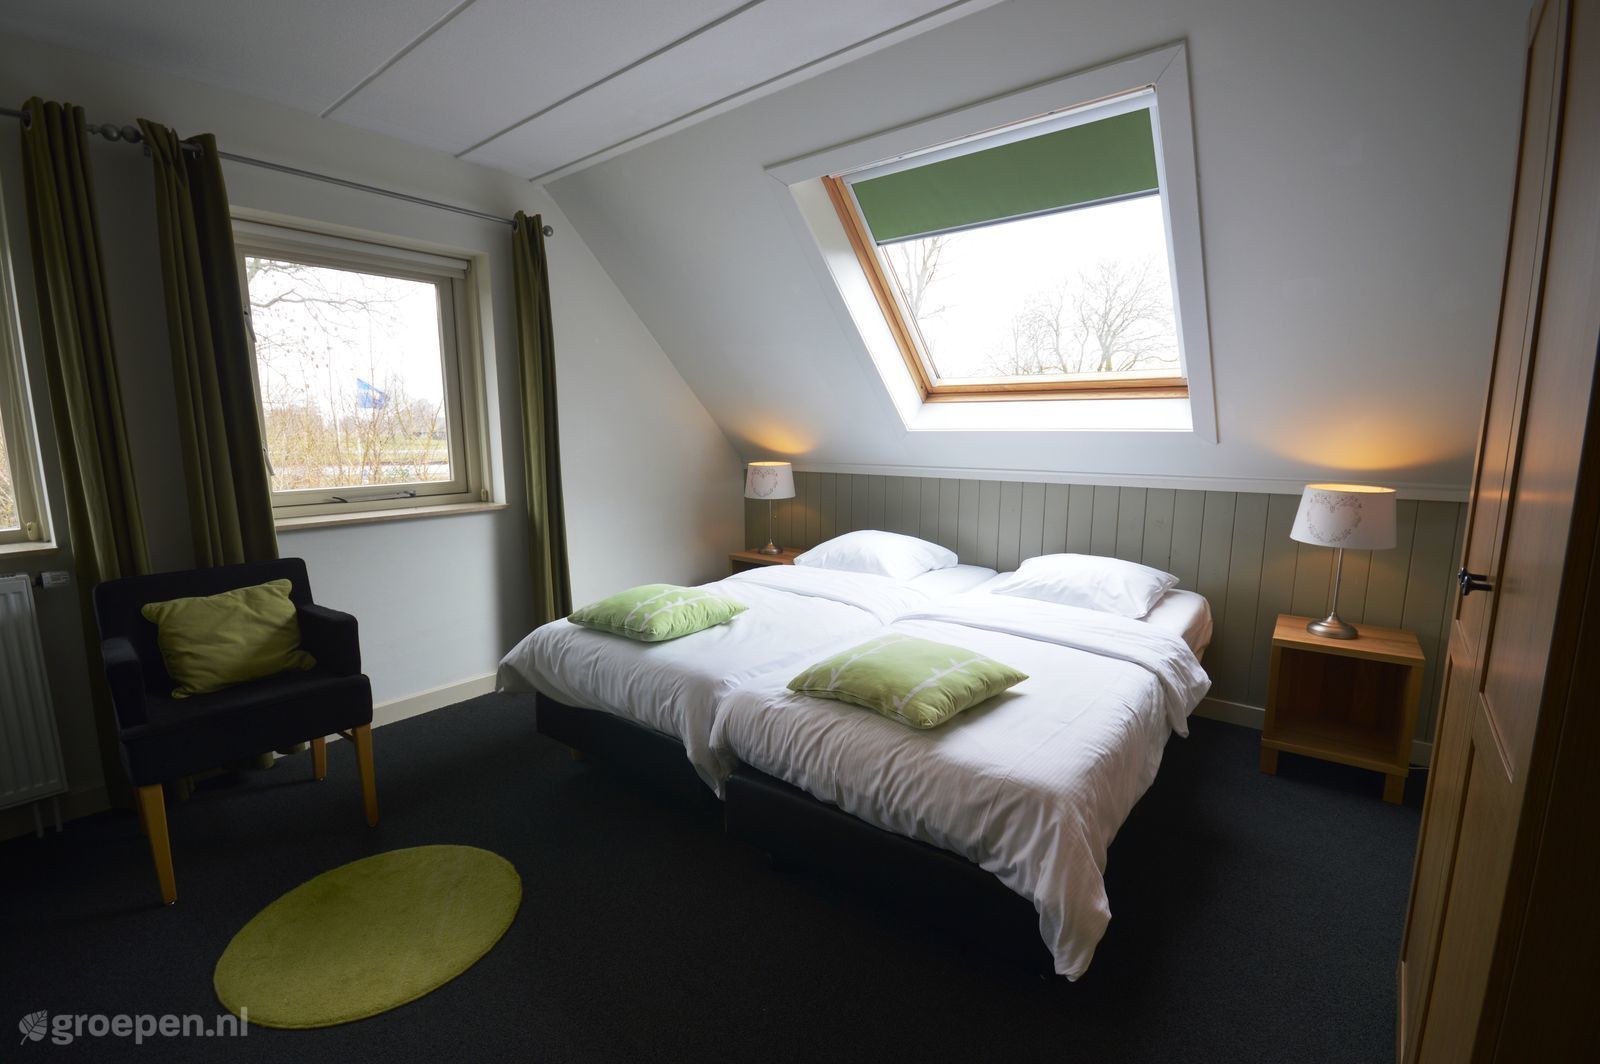 Group accommodation Giethoorn